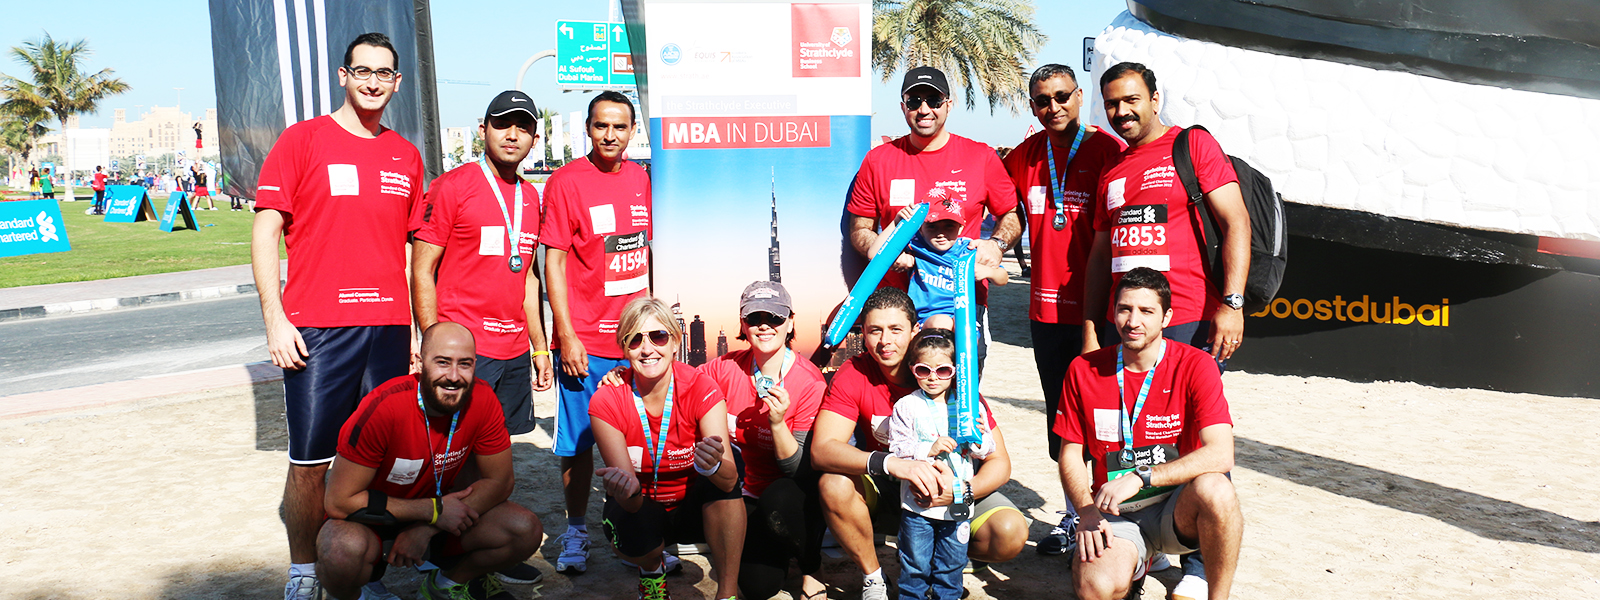 Strathclyde alumni group at Dubai marathon